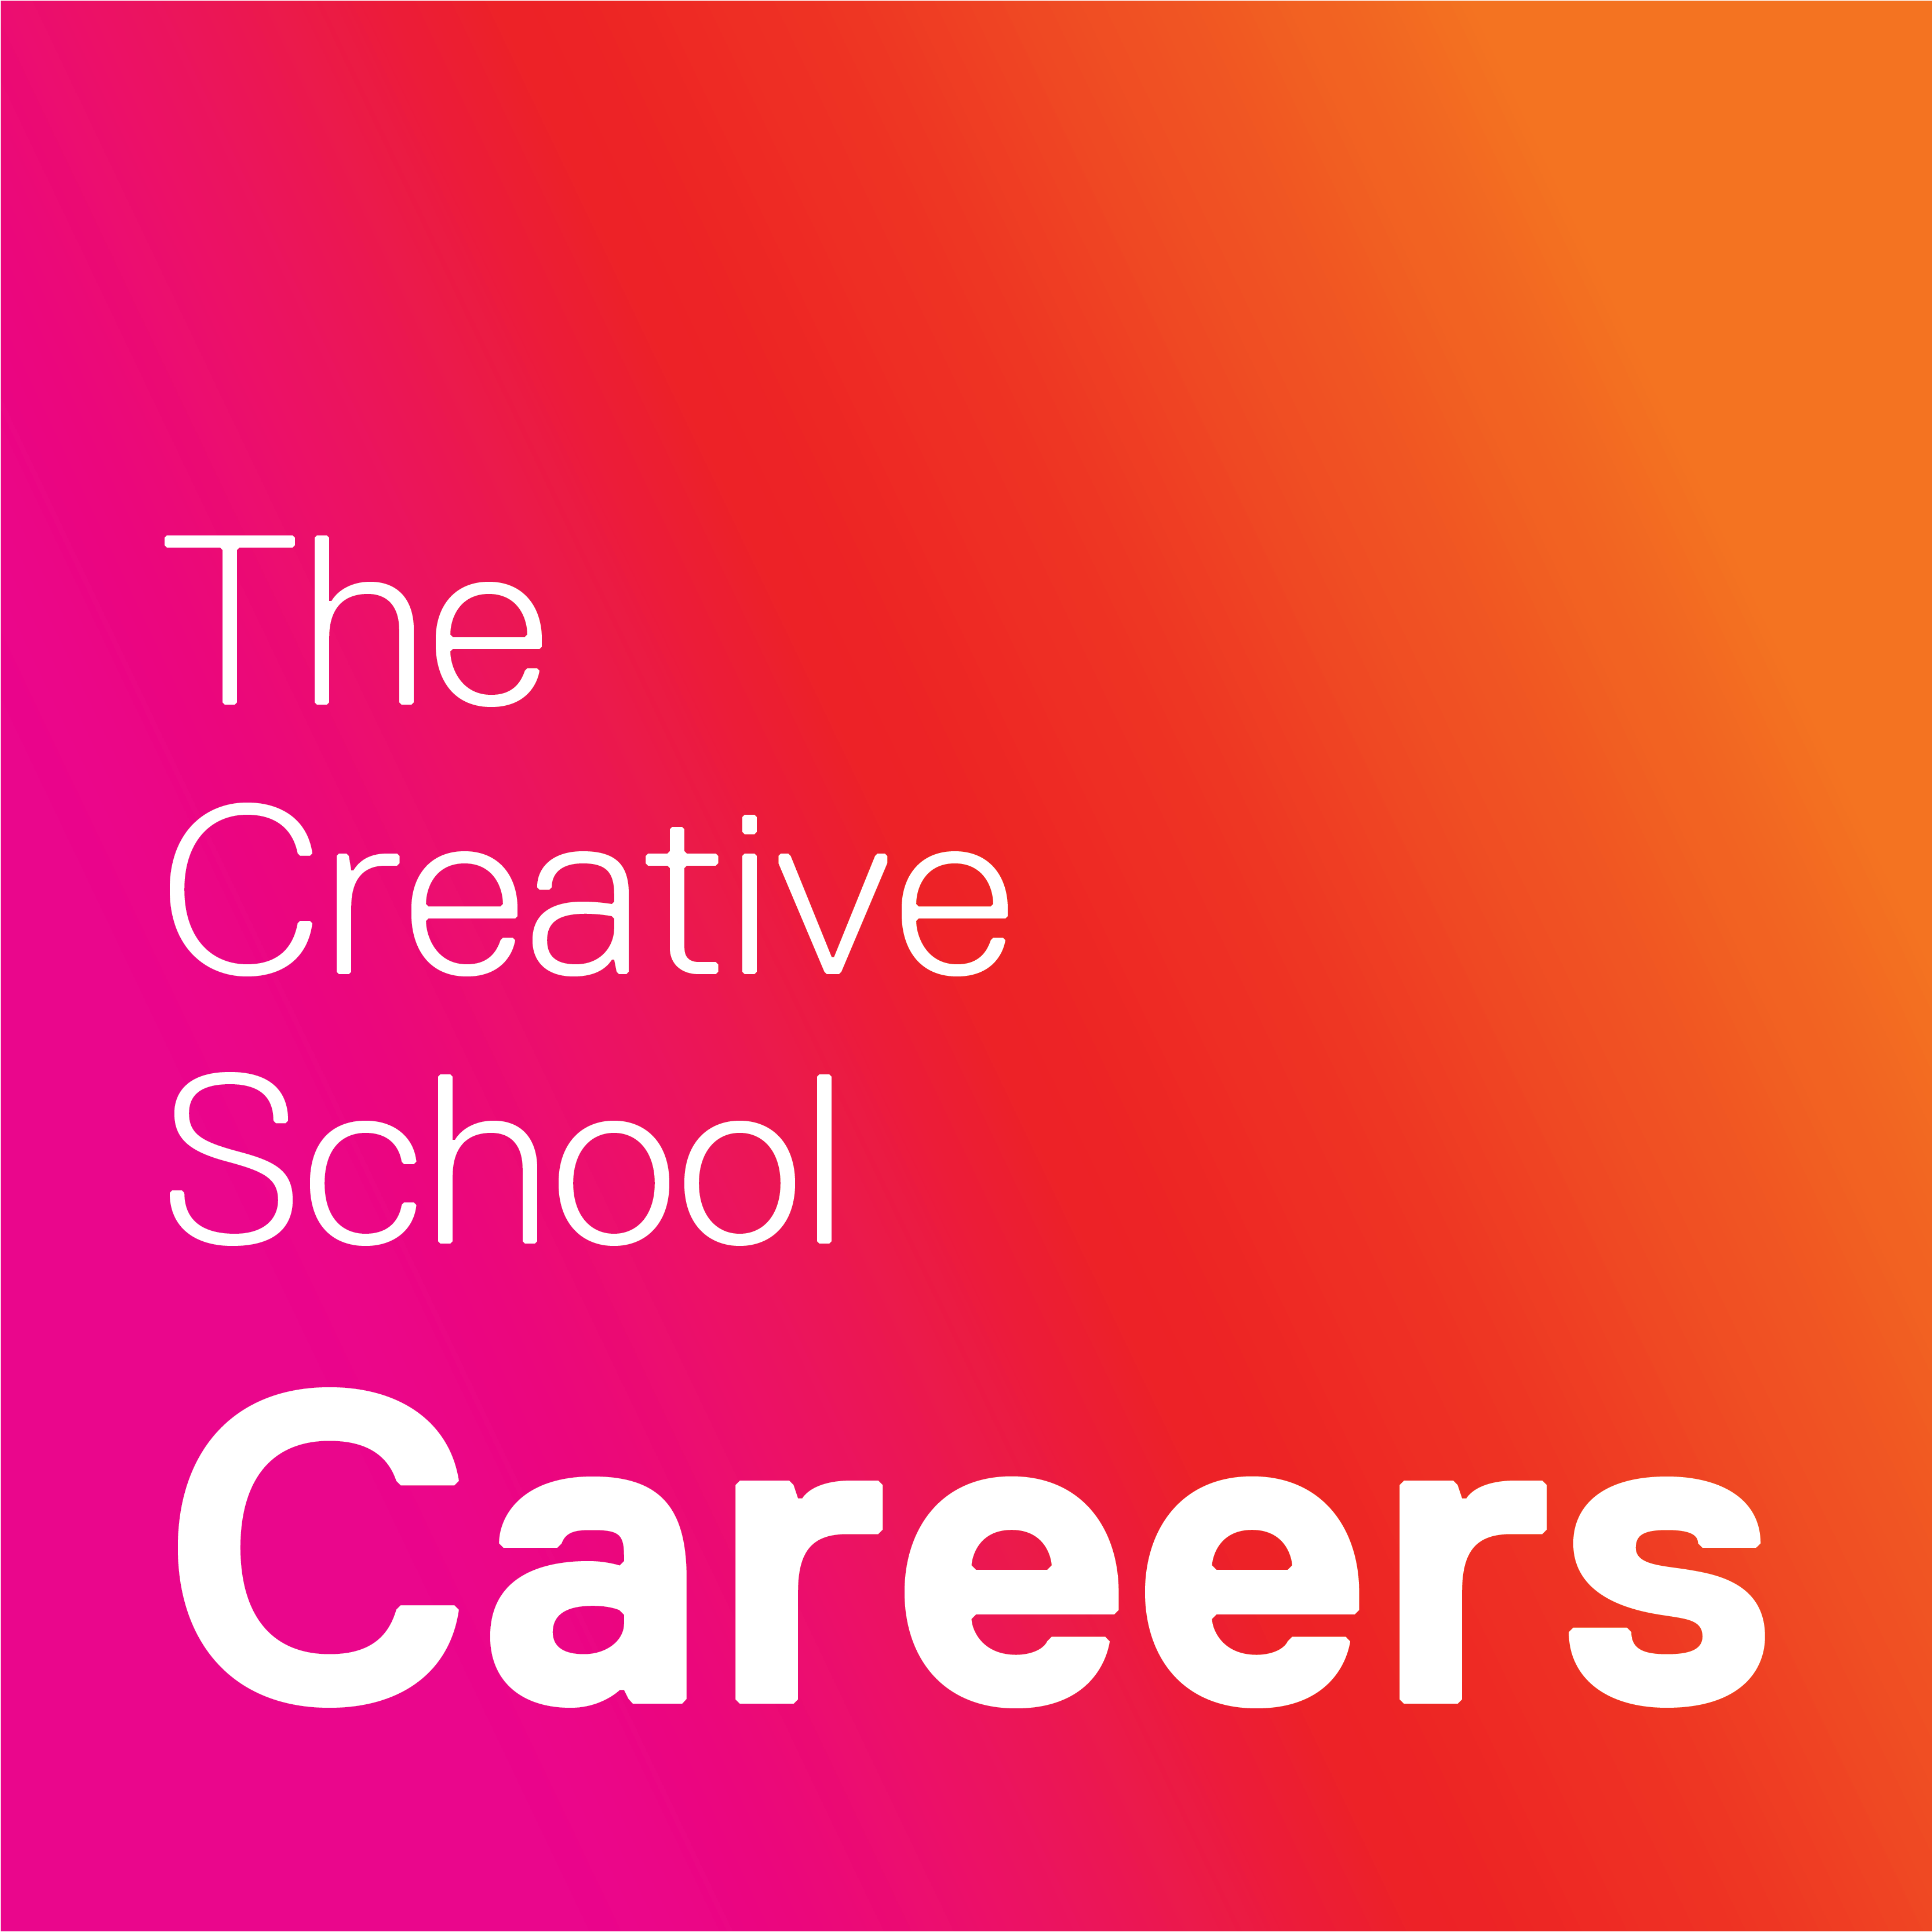 The Creative School Careers logo